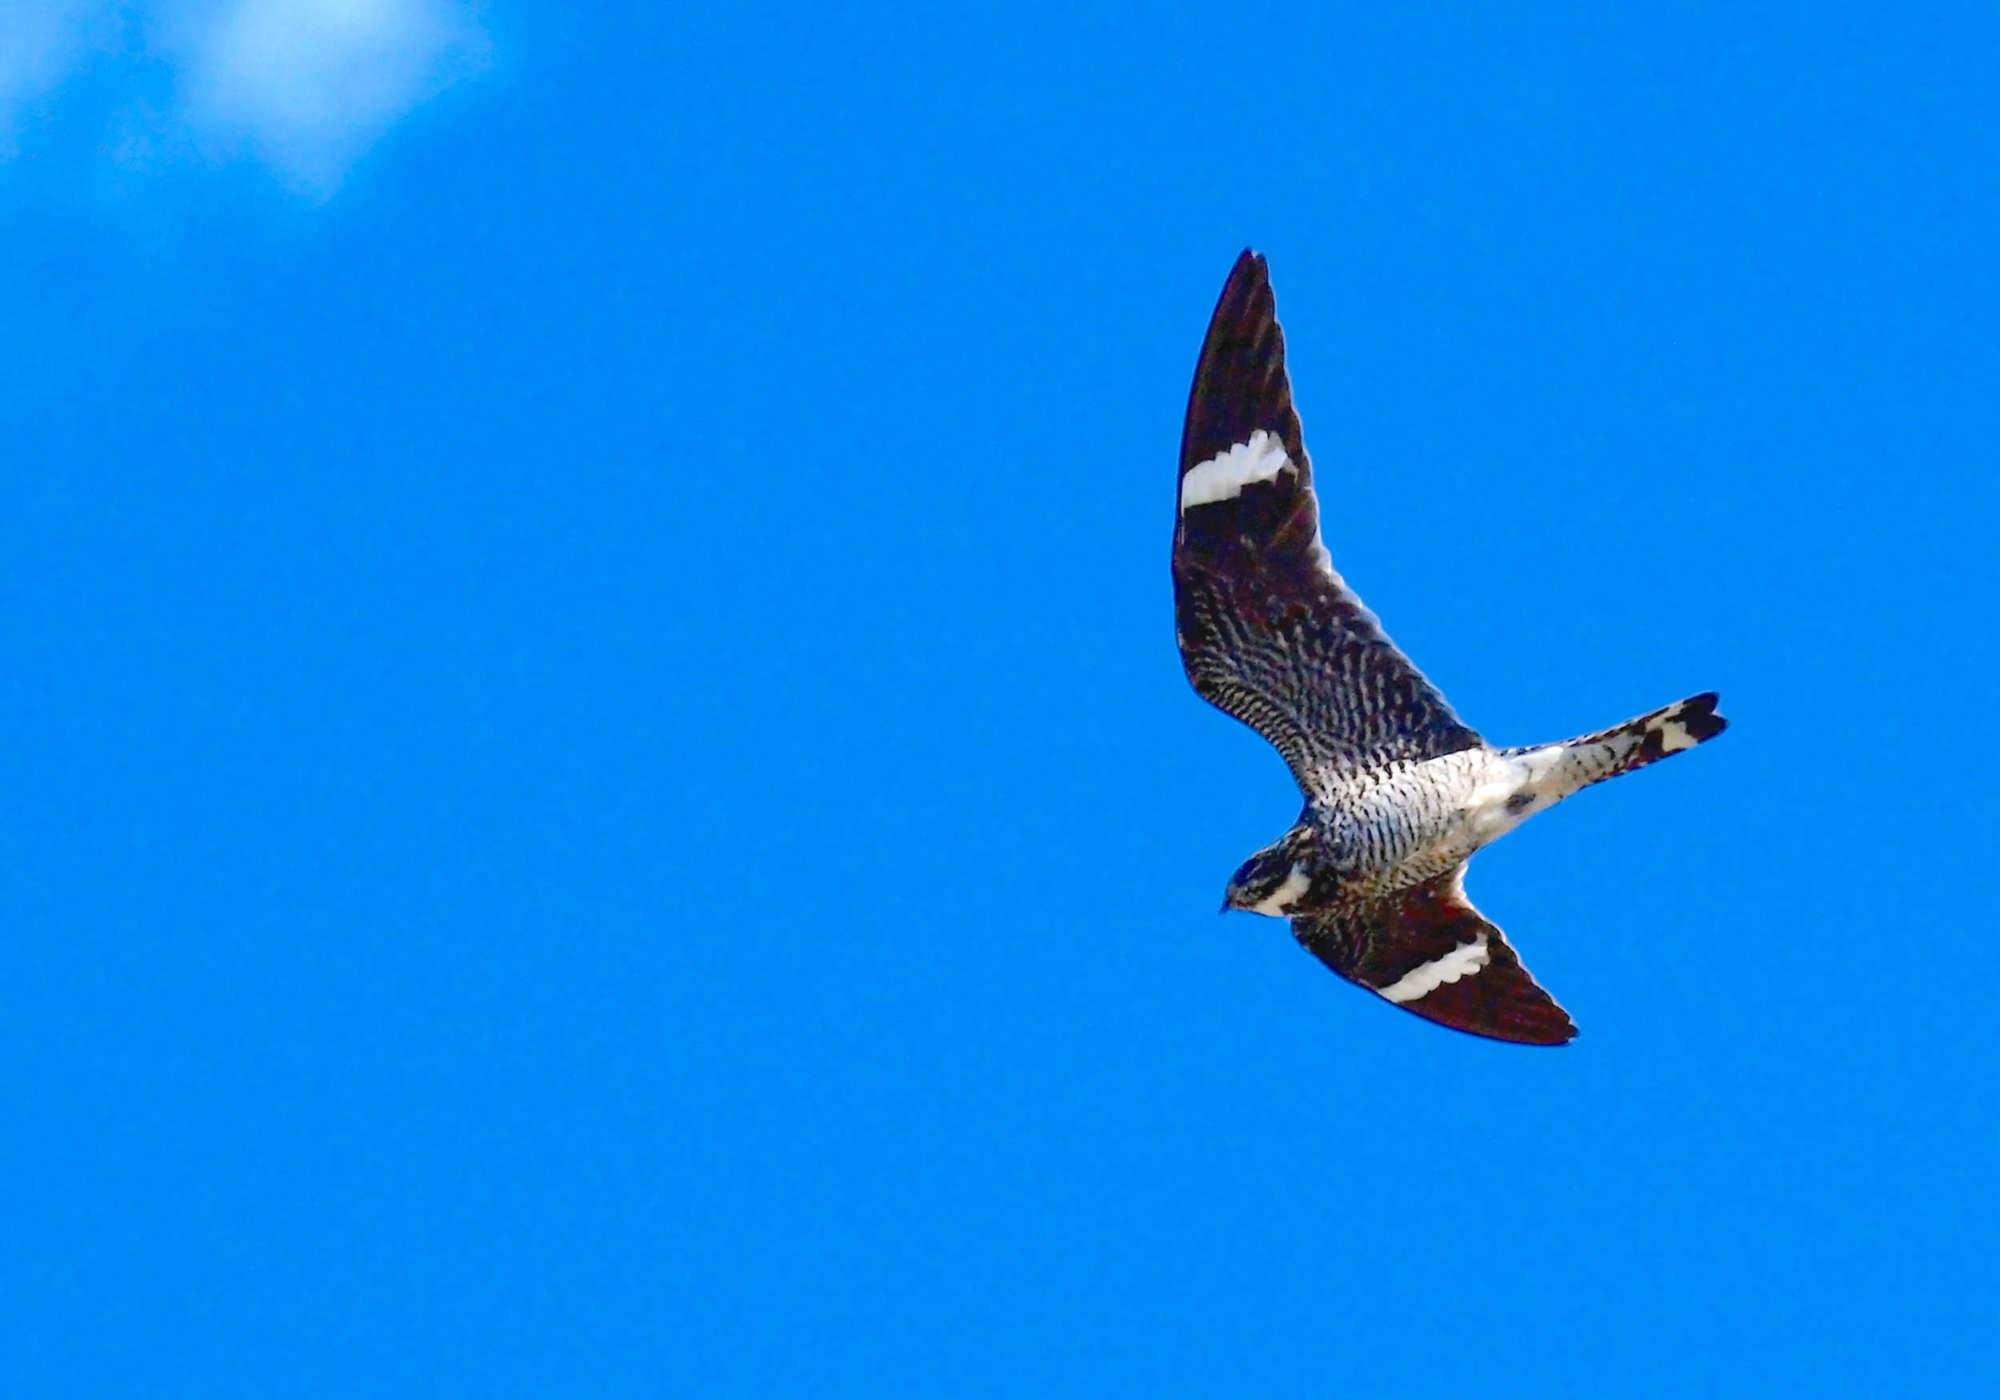 Common Nighthawk in flight.  Bryce Bradford - https://www.flickr.com/photos/brb_photography/